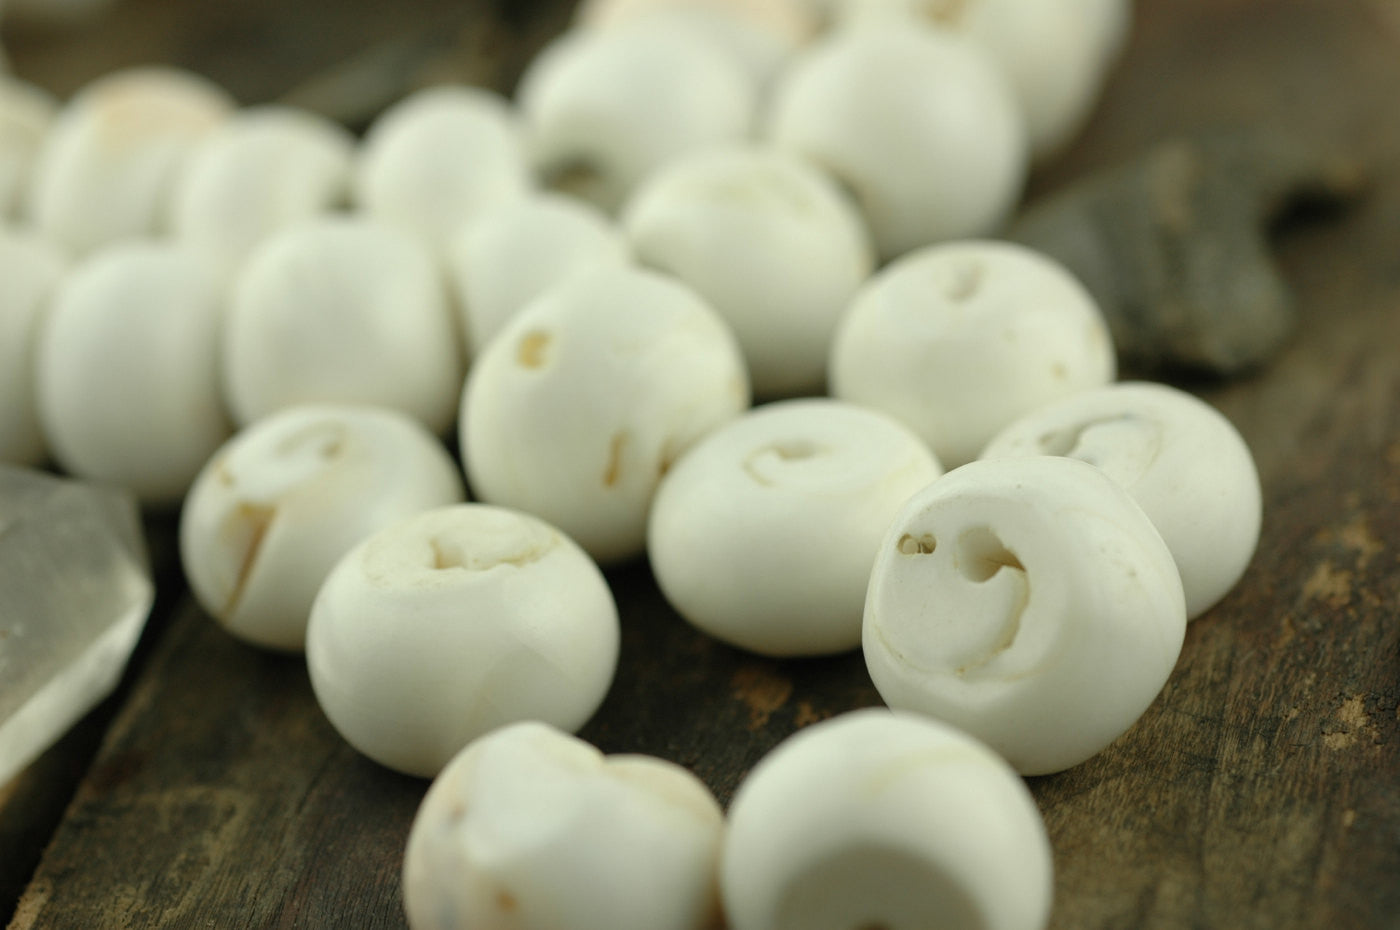 White Caps at Sea: Pure White Nepali Conch Shell Beads18x14mm, 10 loose beads, Nautical Boho Yoga Fashion, Jewelry Making Supplies - ShopWomanShopsWorld.com. Bone Beads, Tassels, Pom Poms, African Beads.